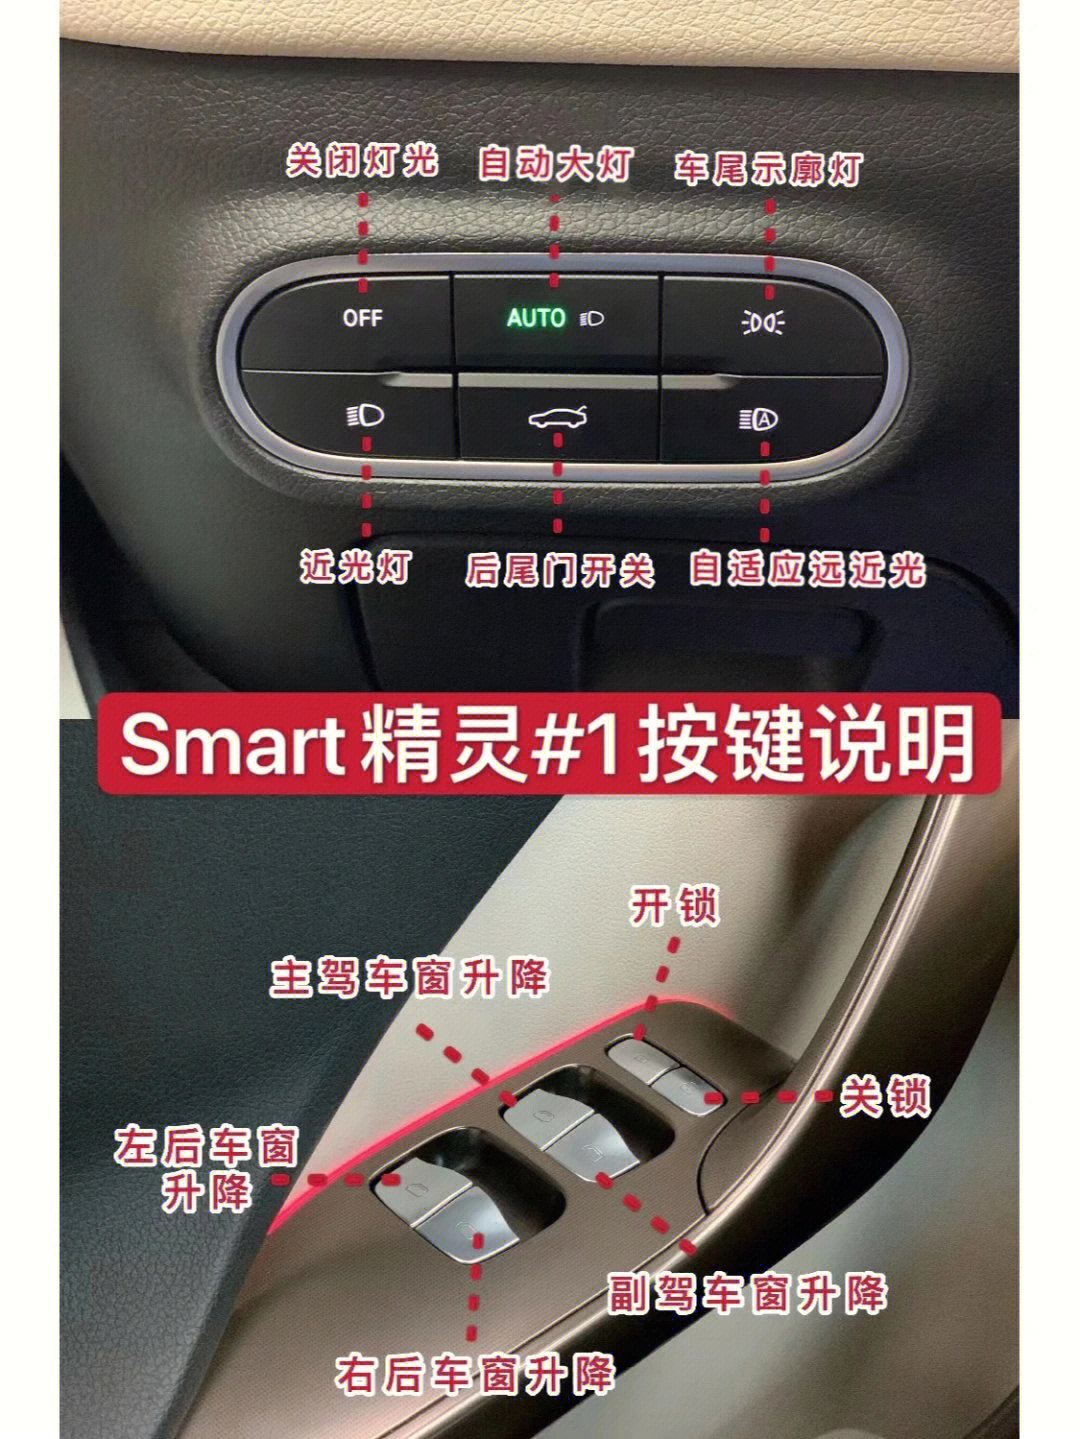 smart指示灯说明书图片